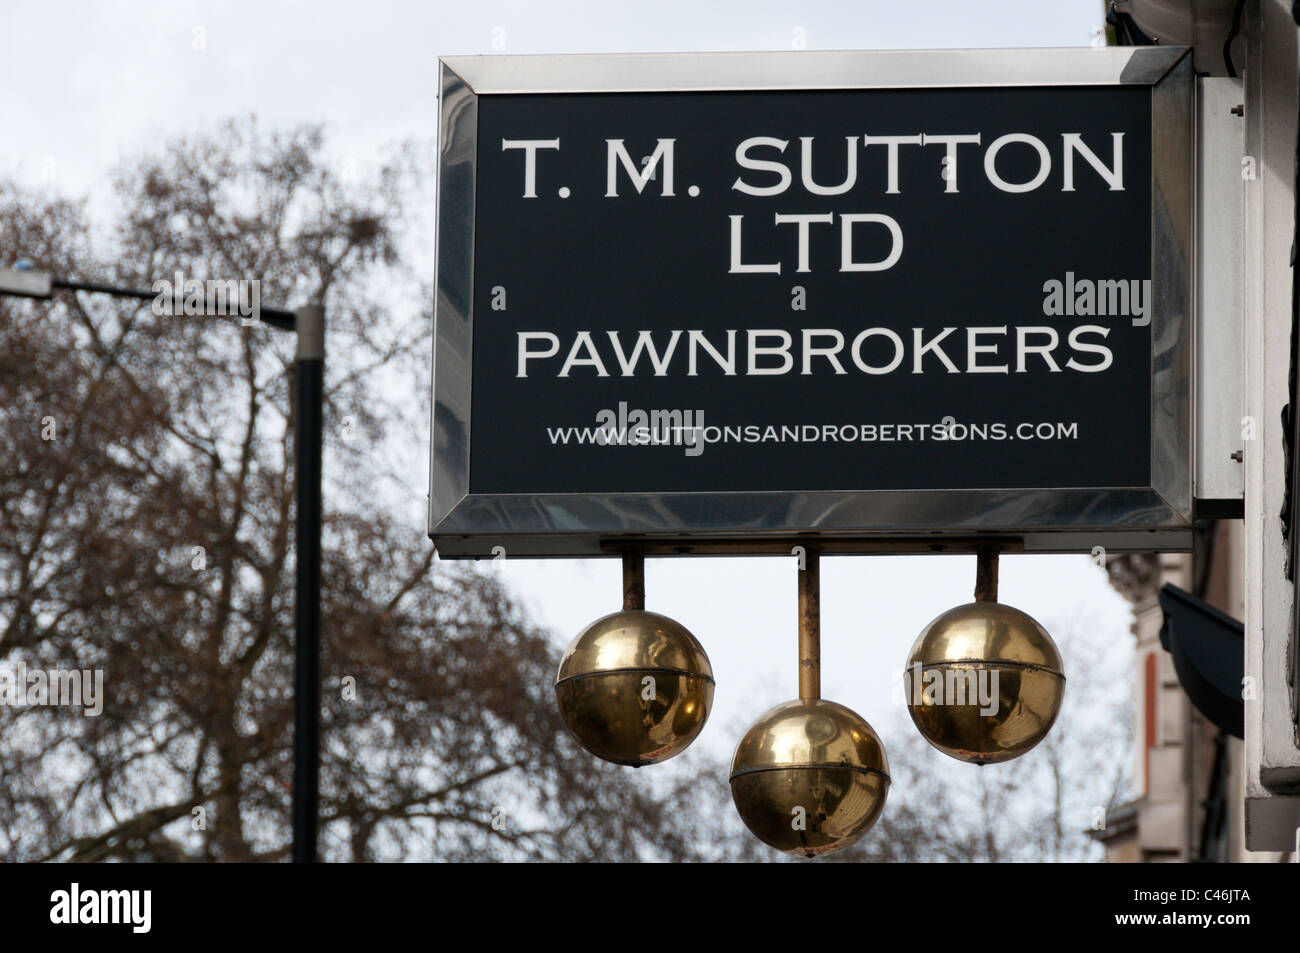 T M Sutton Ltd Pawnbrokers sign Stock Photo